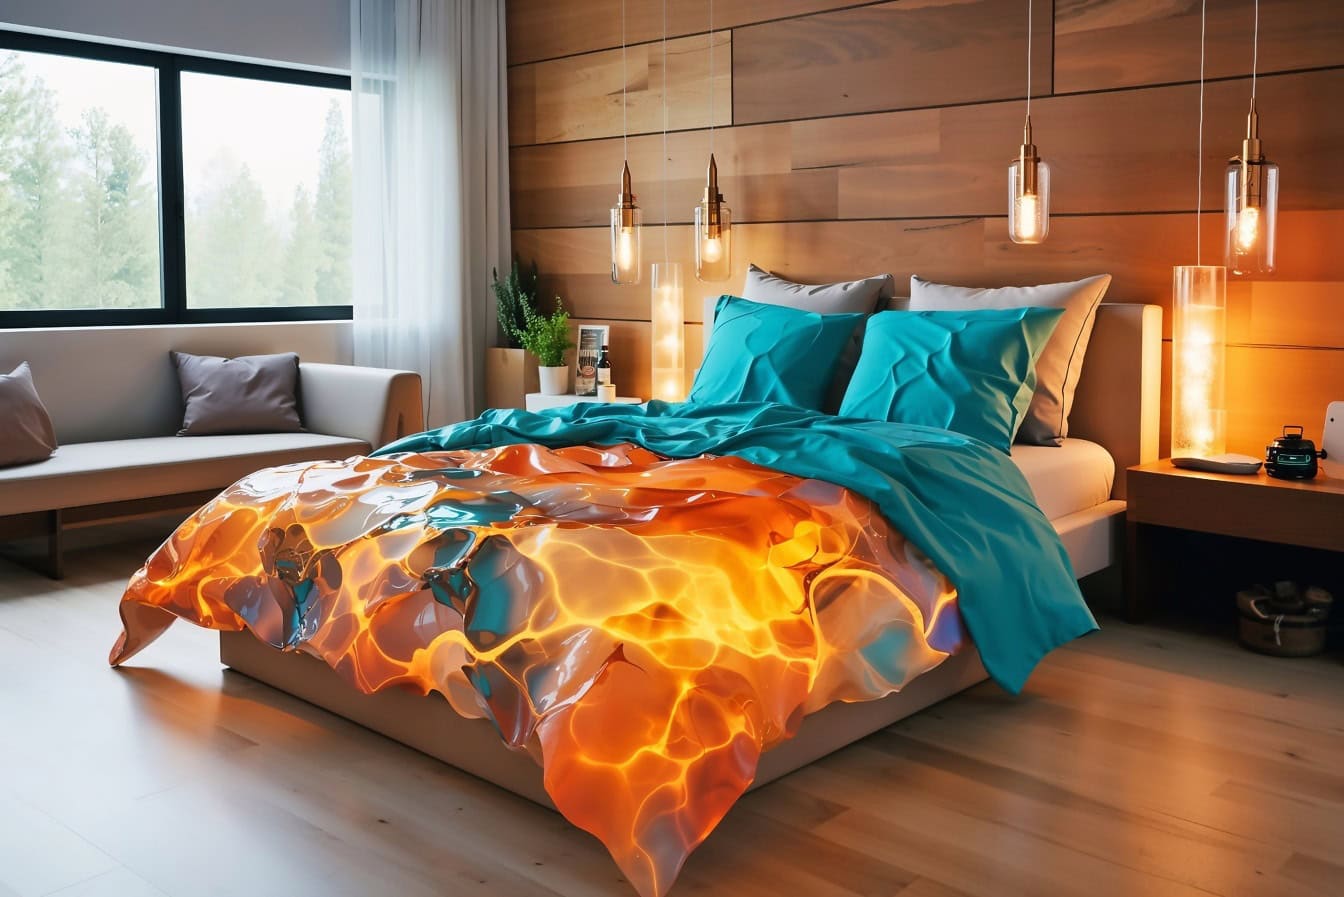 Kamar tidur dengan tempat tidur dengan bantal dan seprai dengan desain lava